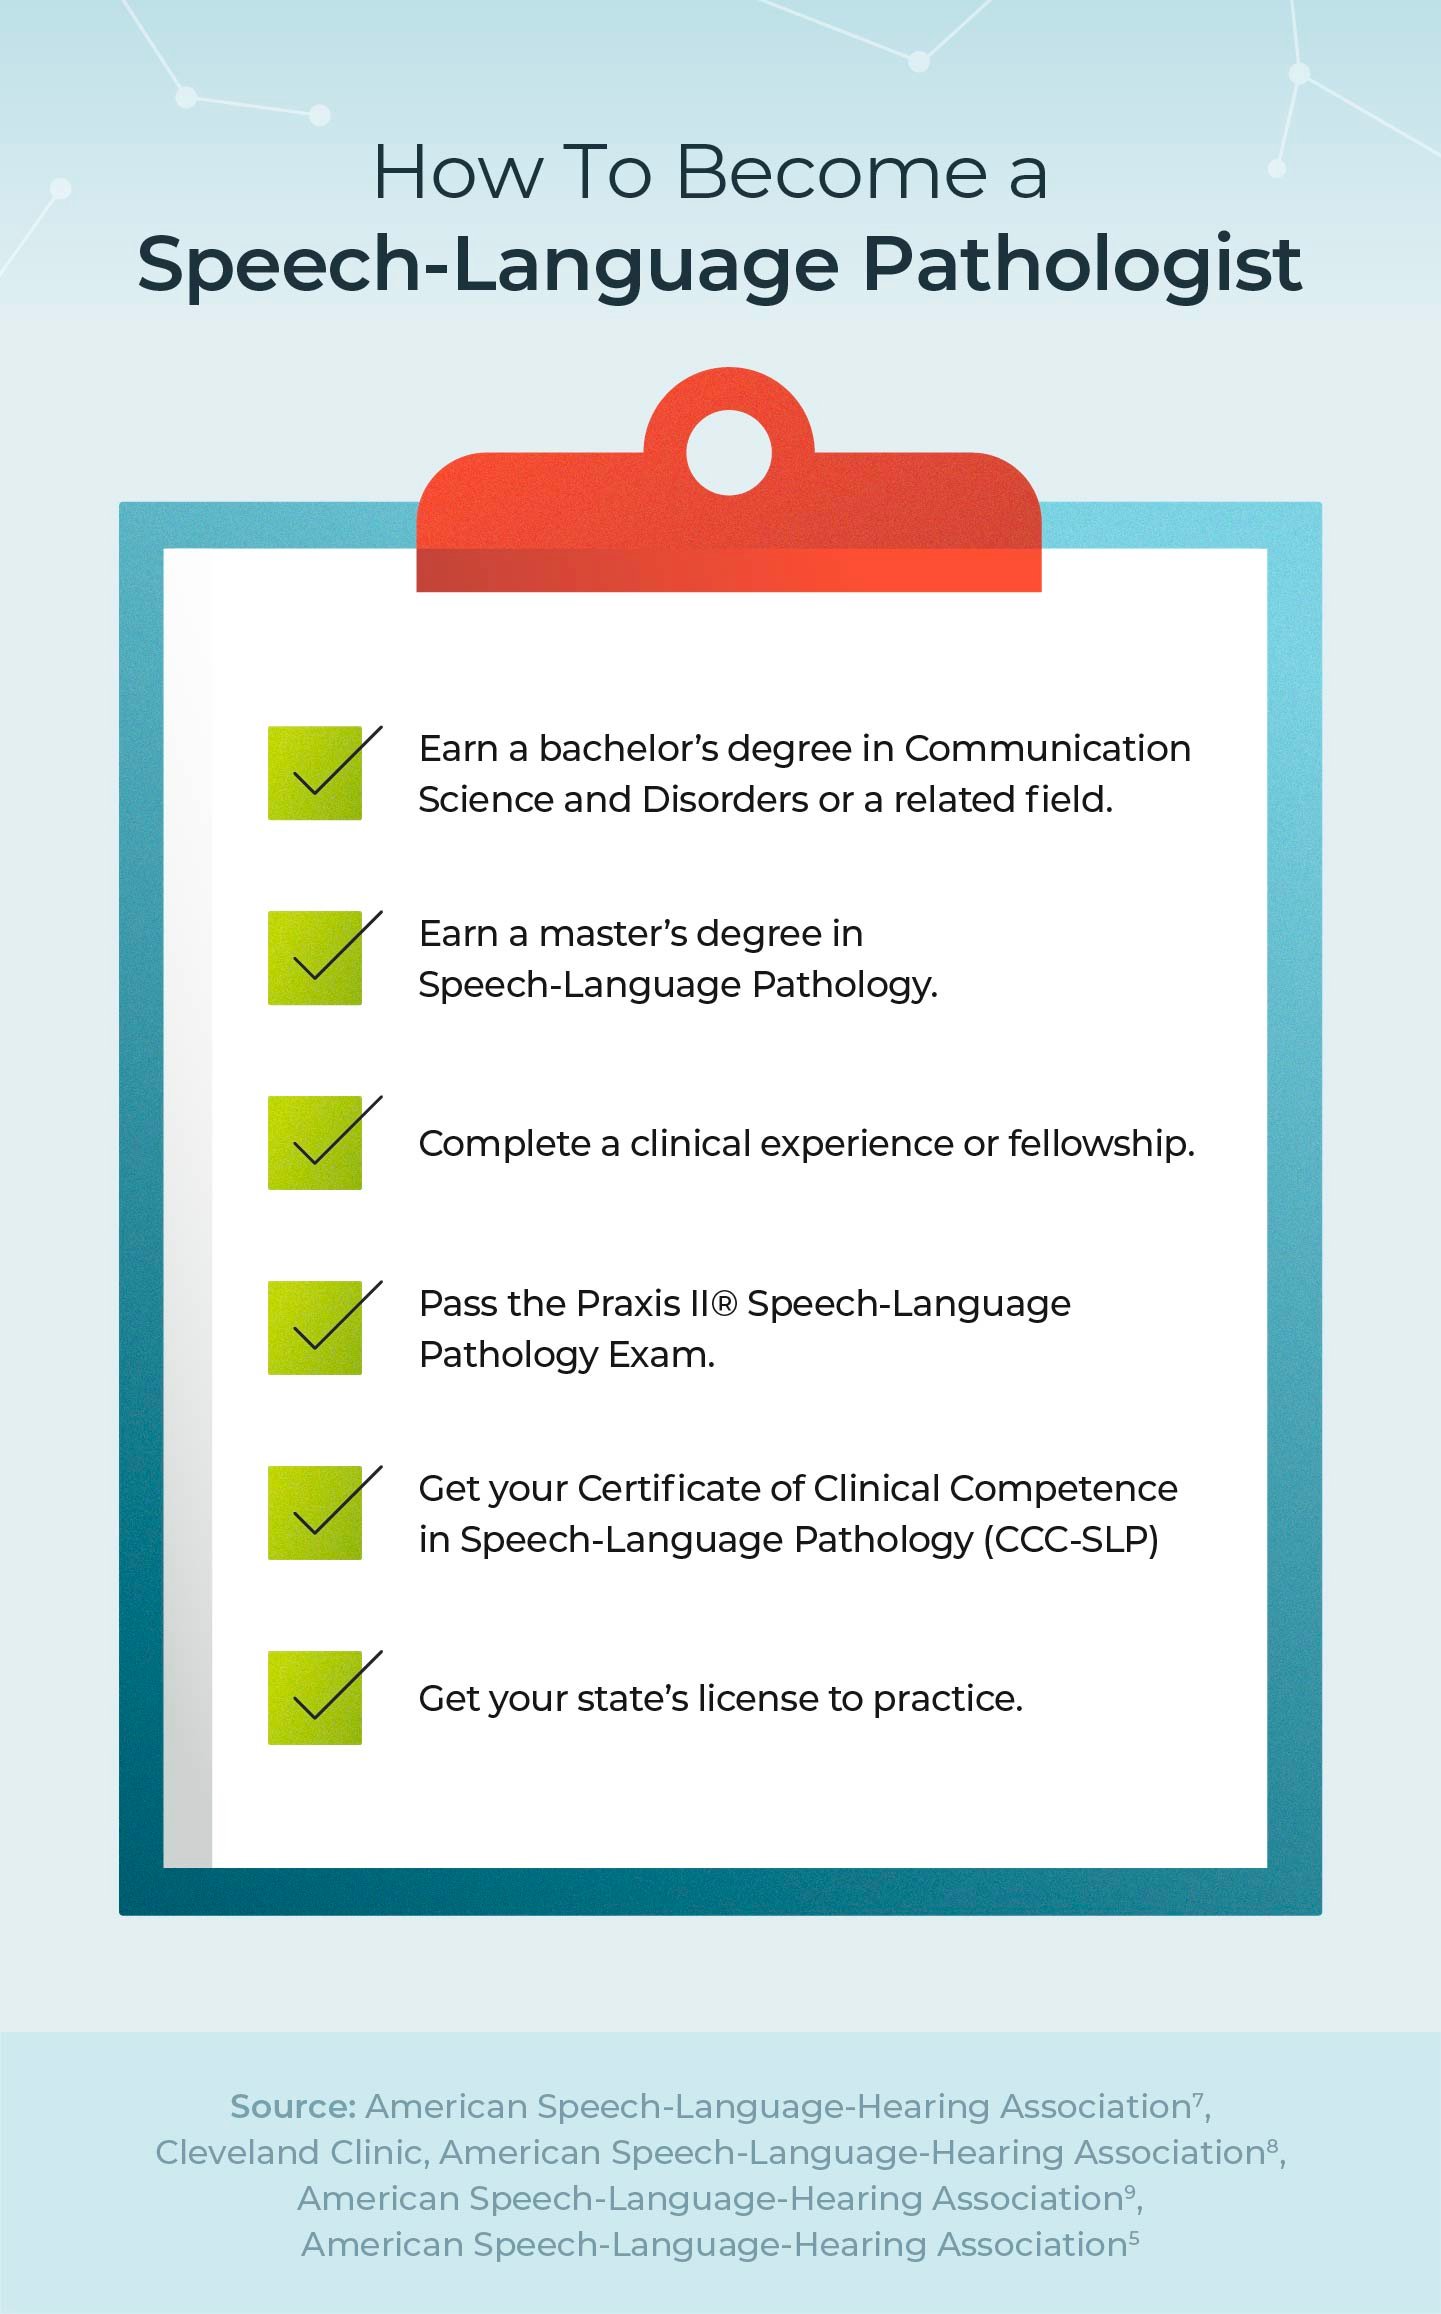 Steps to become a speech-language pathologist.